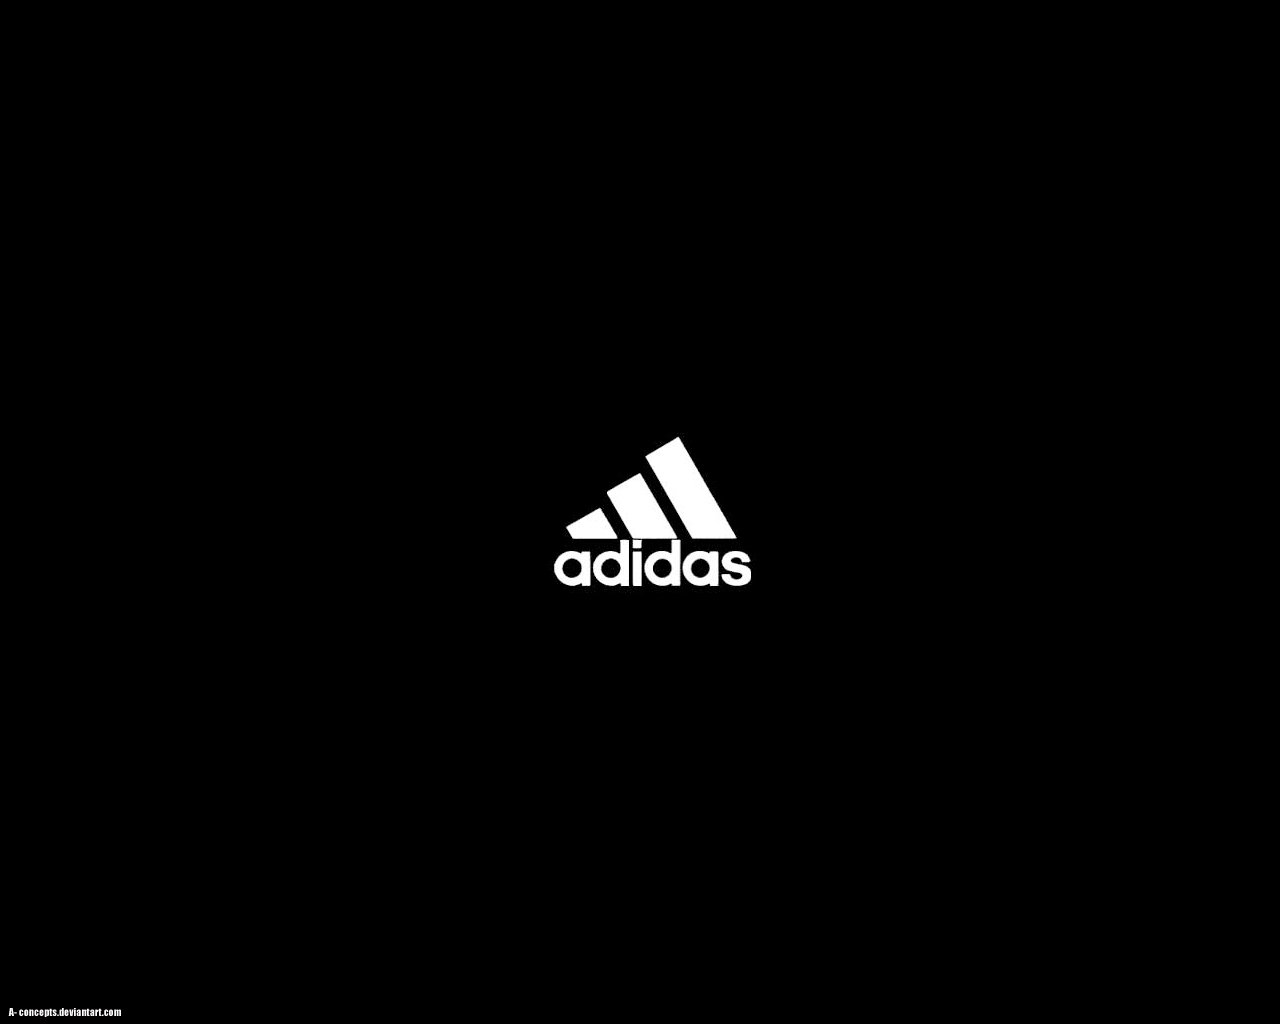 Adidas Logo Black n' by a-concepts on DeviantArt